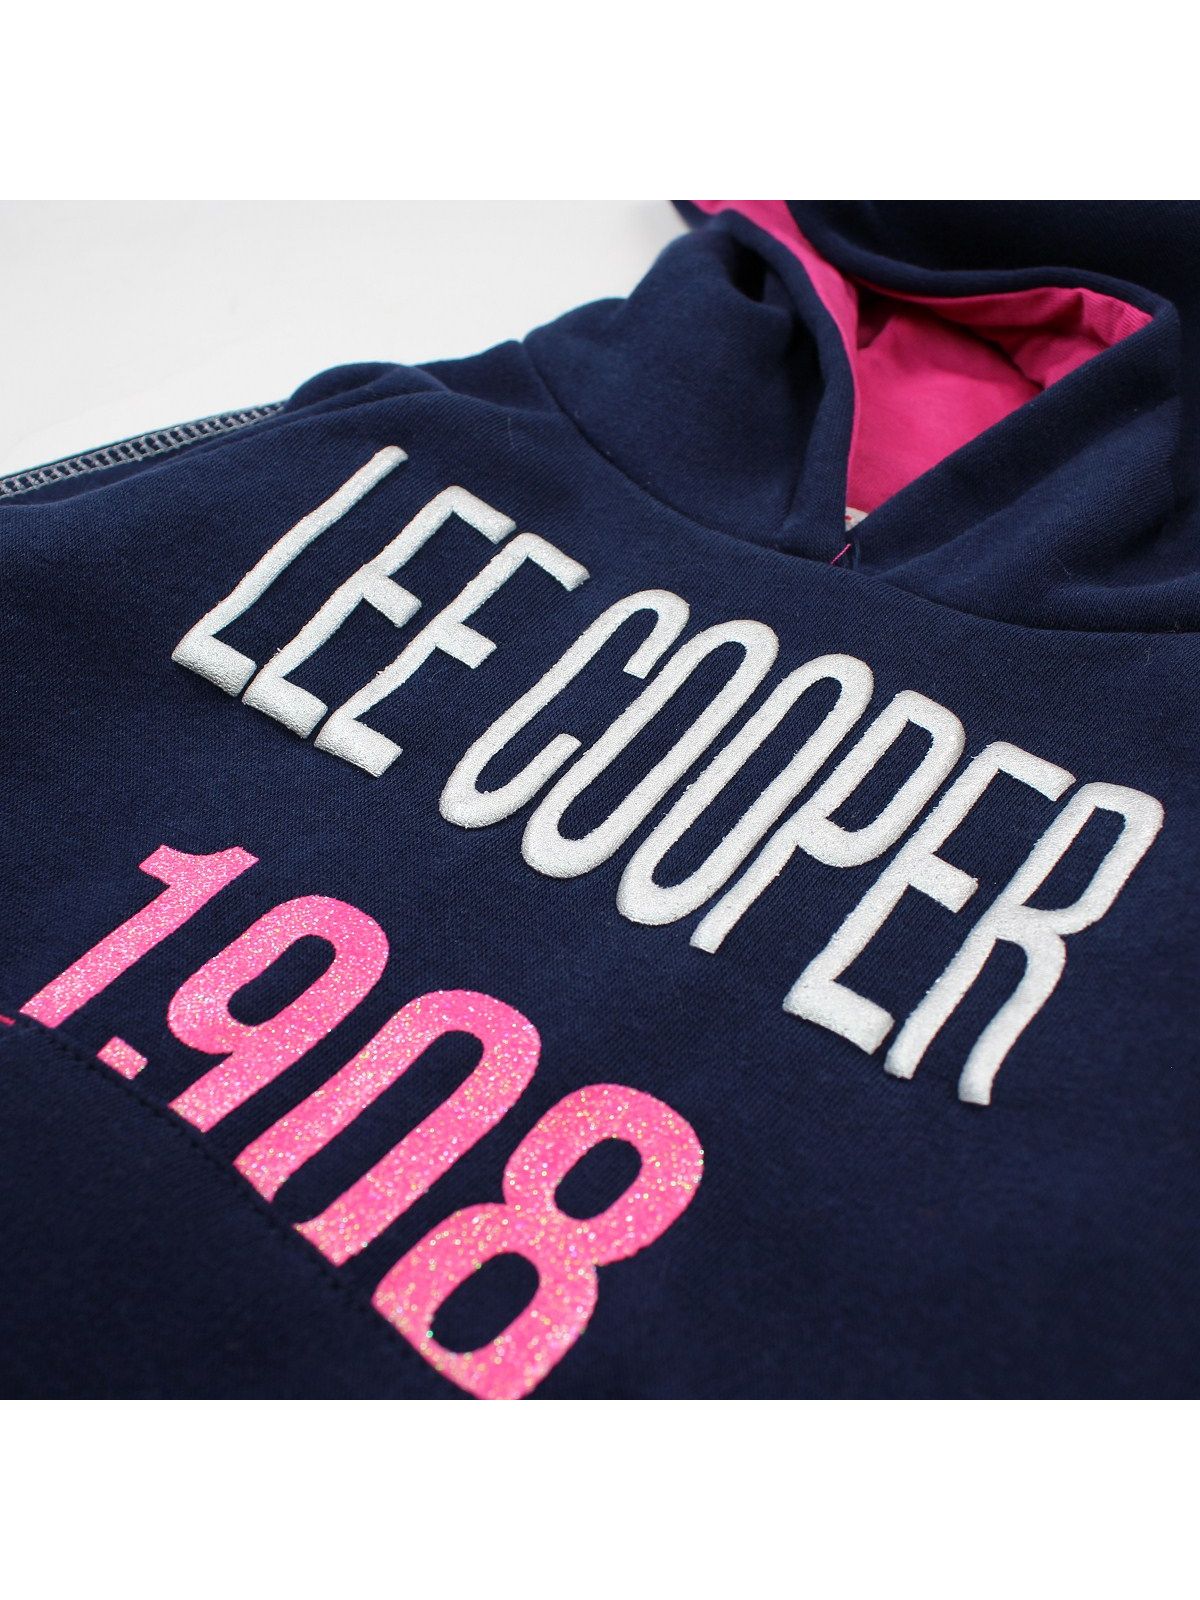 Jogging Lee Cooper